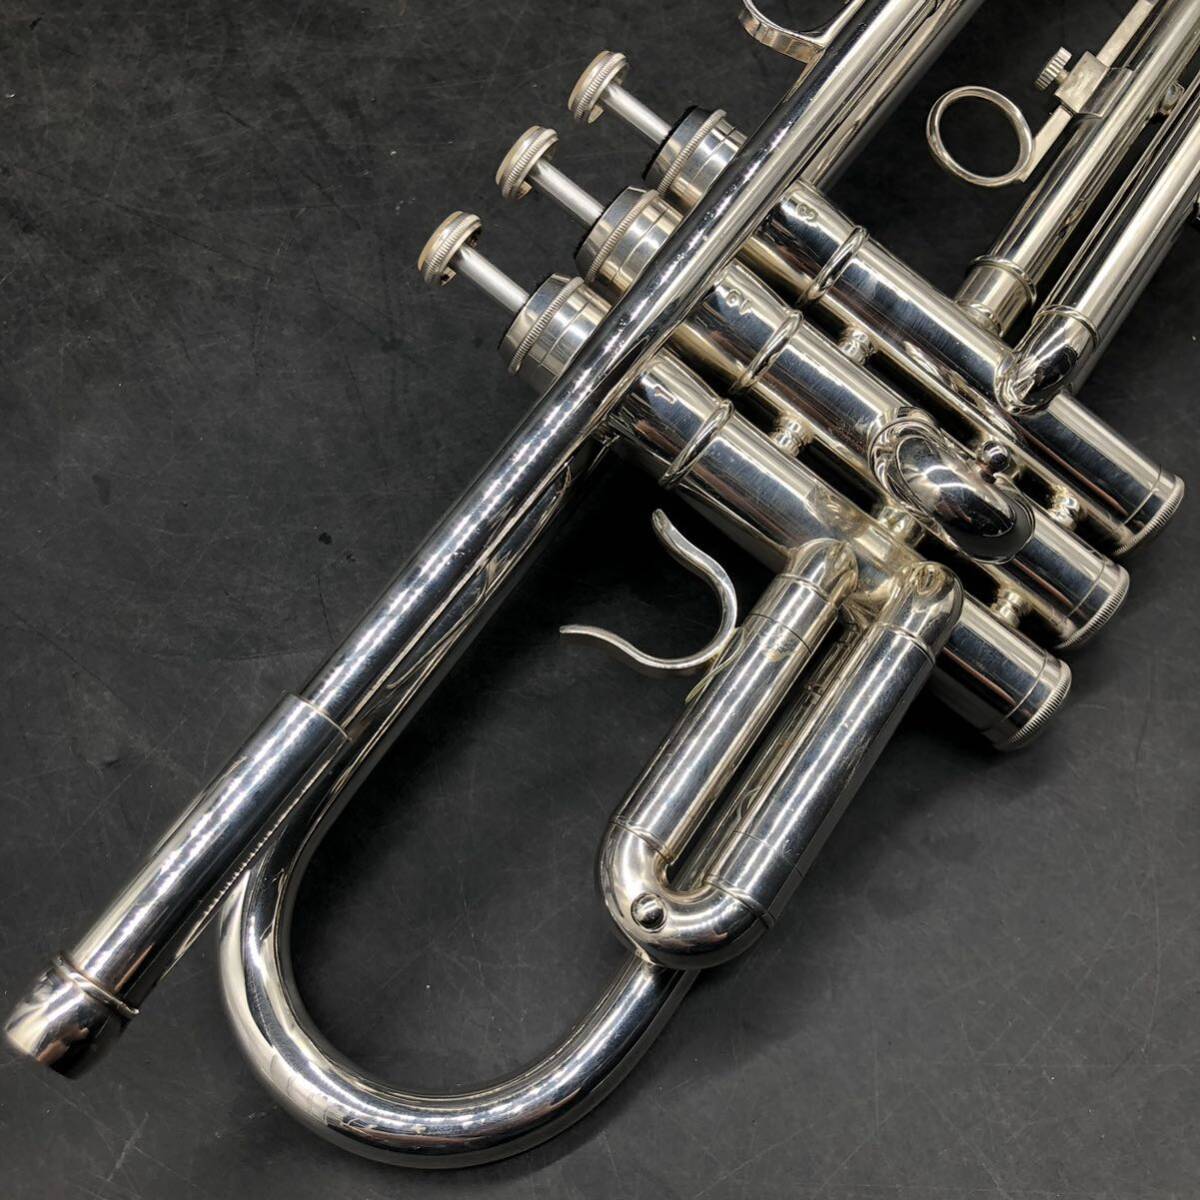 438 Heinrich トランペット IH02018 管楽器 金管楽器 吹奏楽器 音楽 演奏 ケース付 ハードケース付_画像5